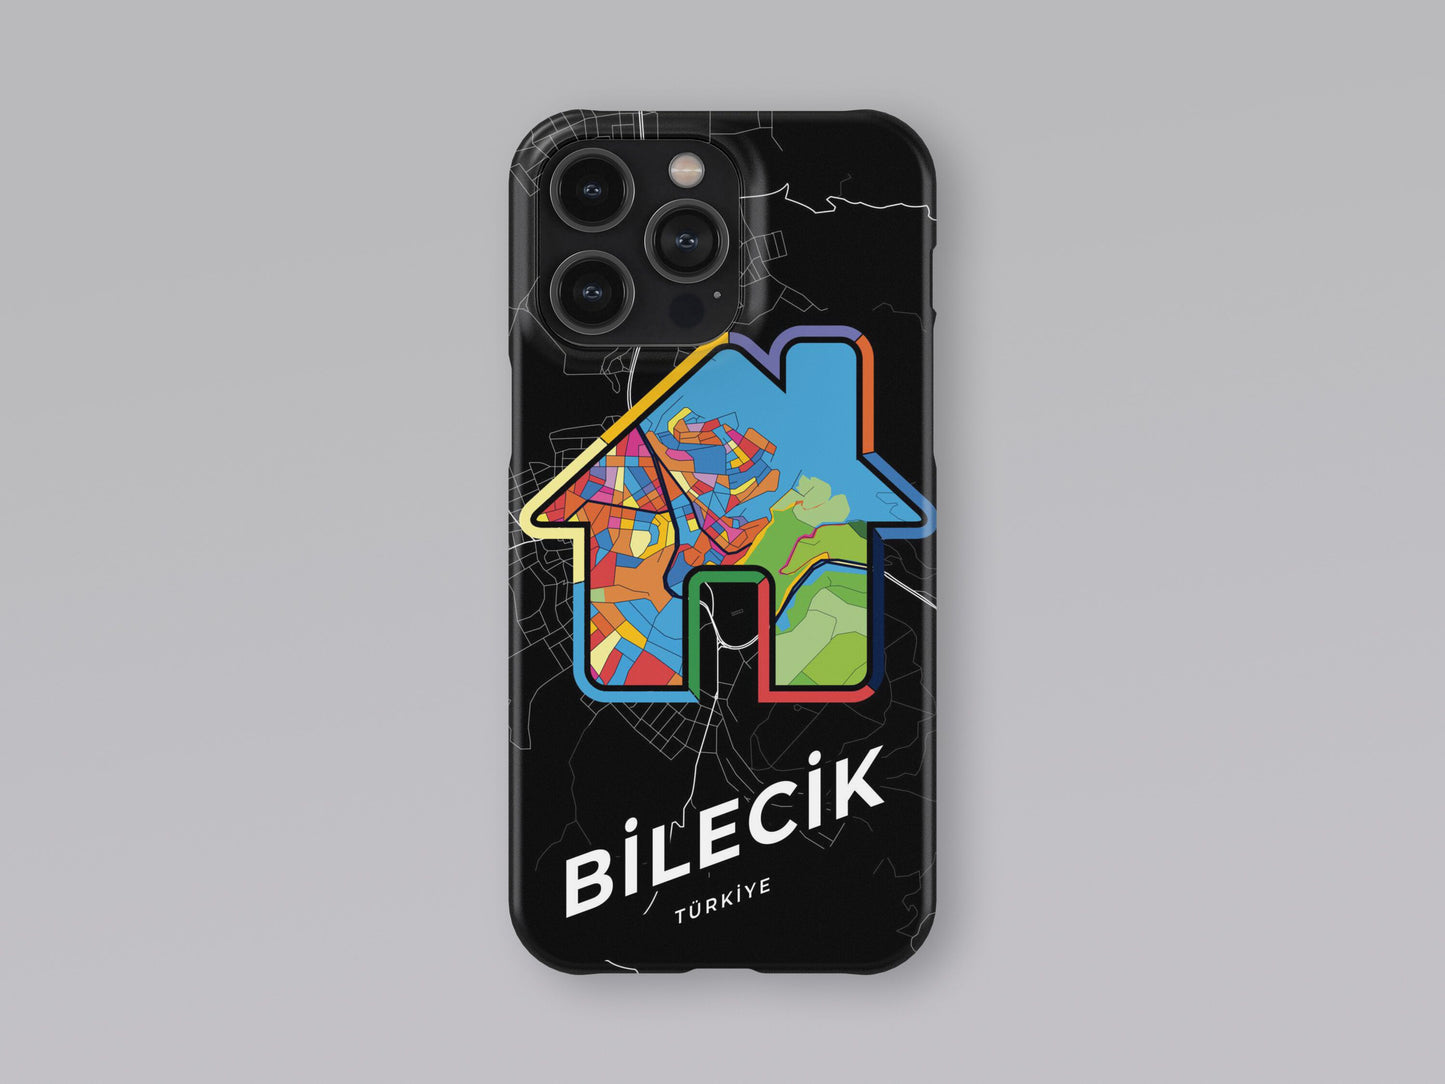 Bilecik Turkey slim phone case with colorful icon. Birthday, wedding or housewarming gift. Couple match cases. 3